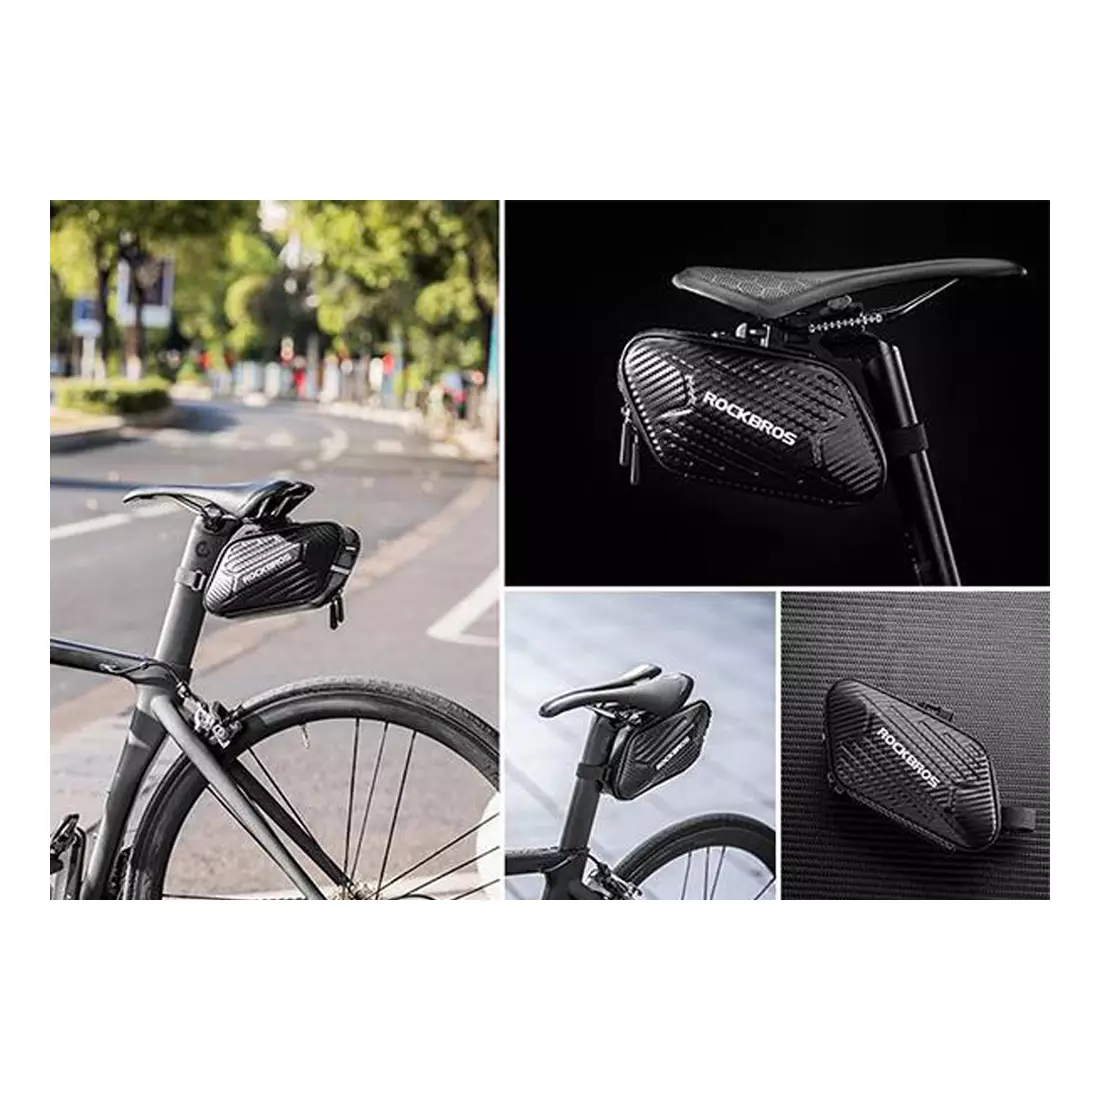 Rockbros Hard Shell sac de șa de bicicletă cu un clip,, 1,5l, negru B59